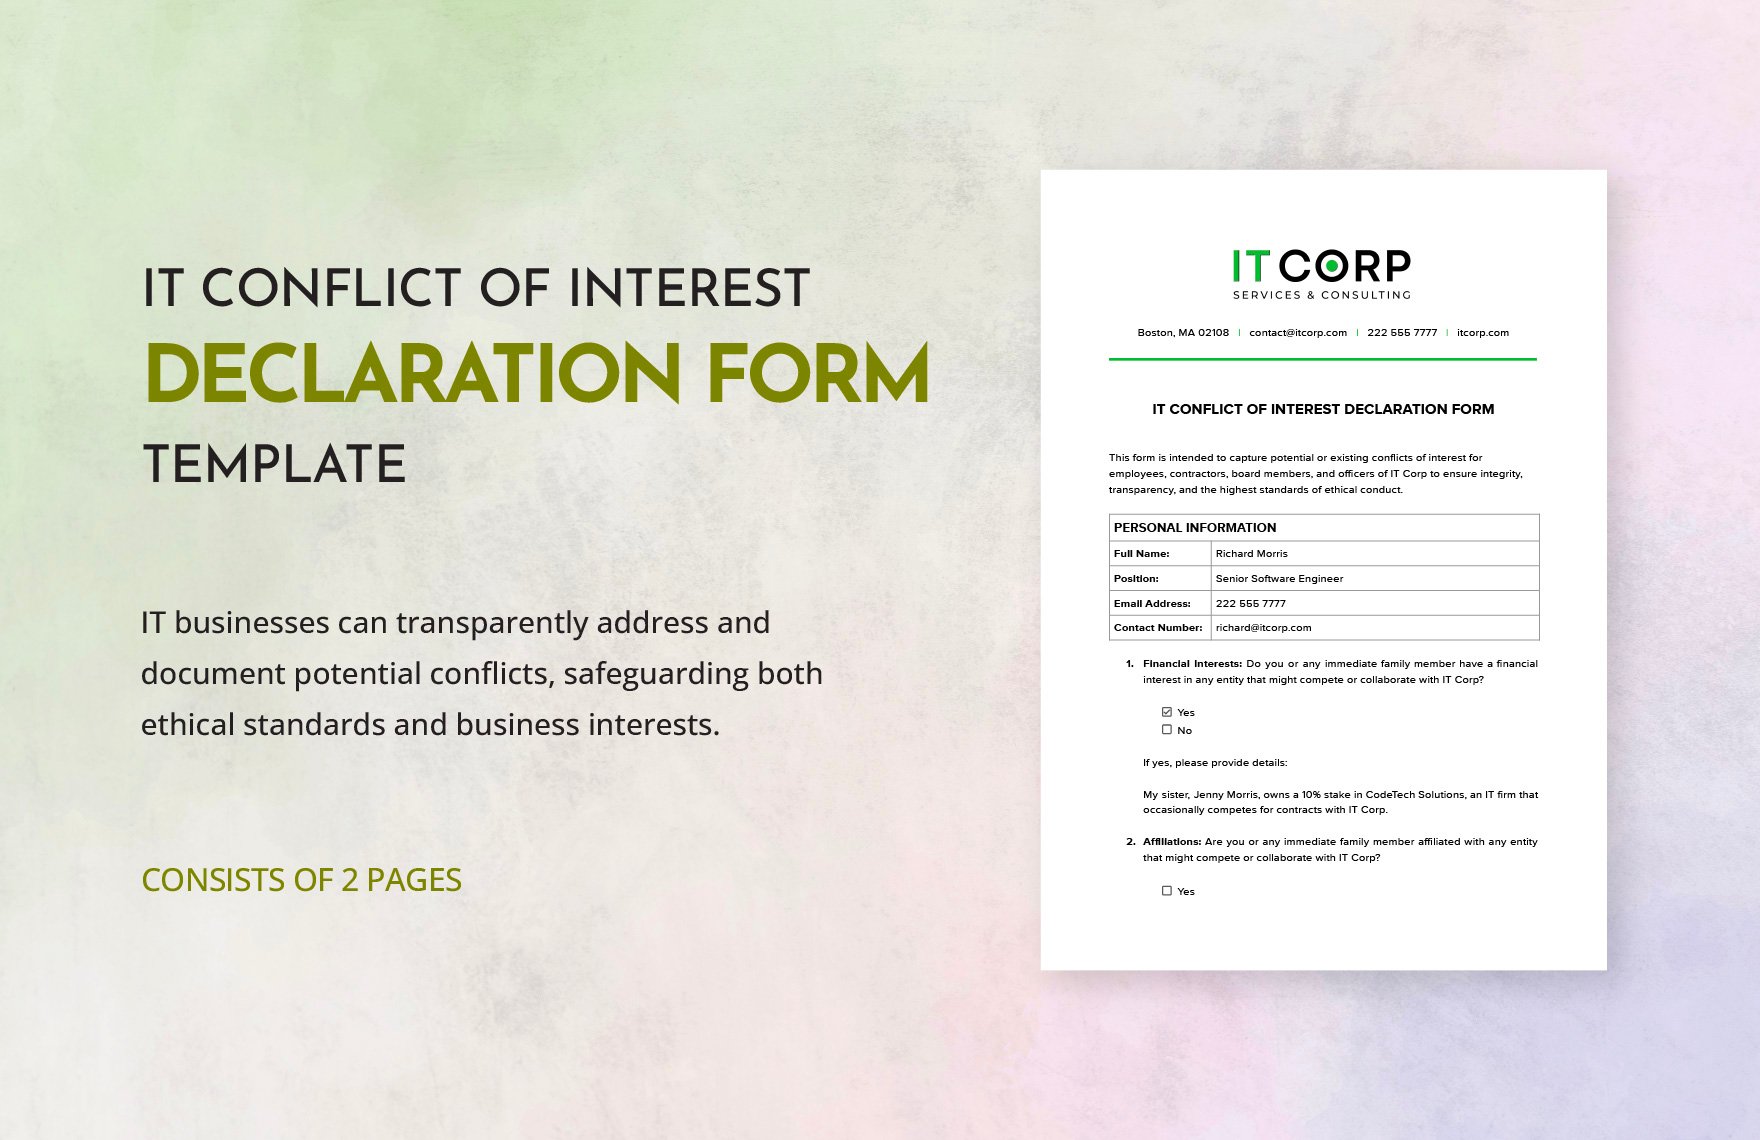 IT Conflict of Interest Declaration Form Template